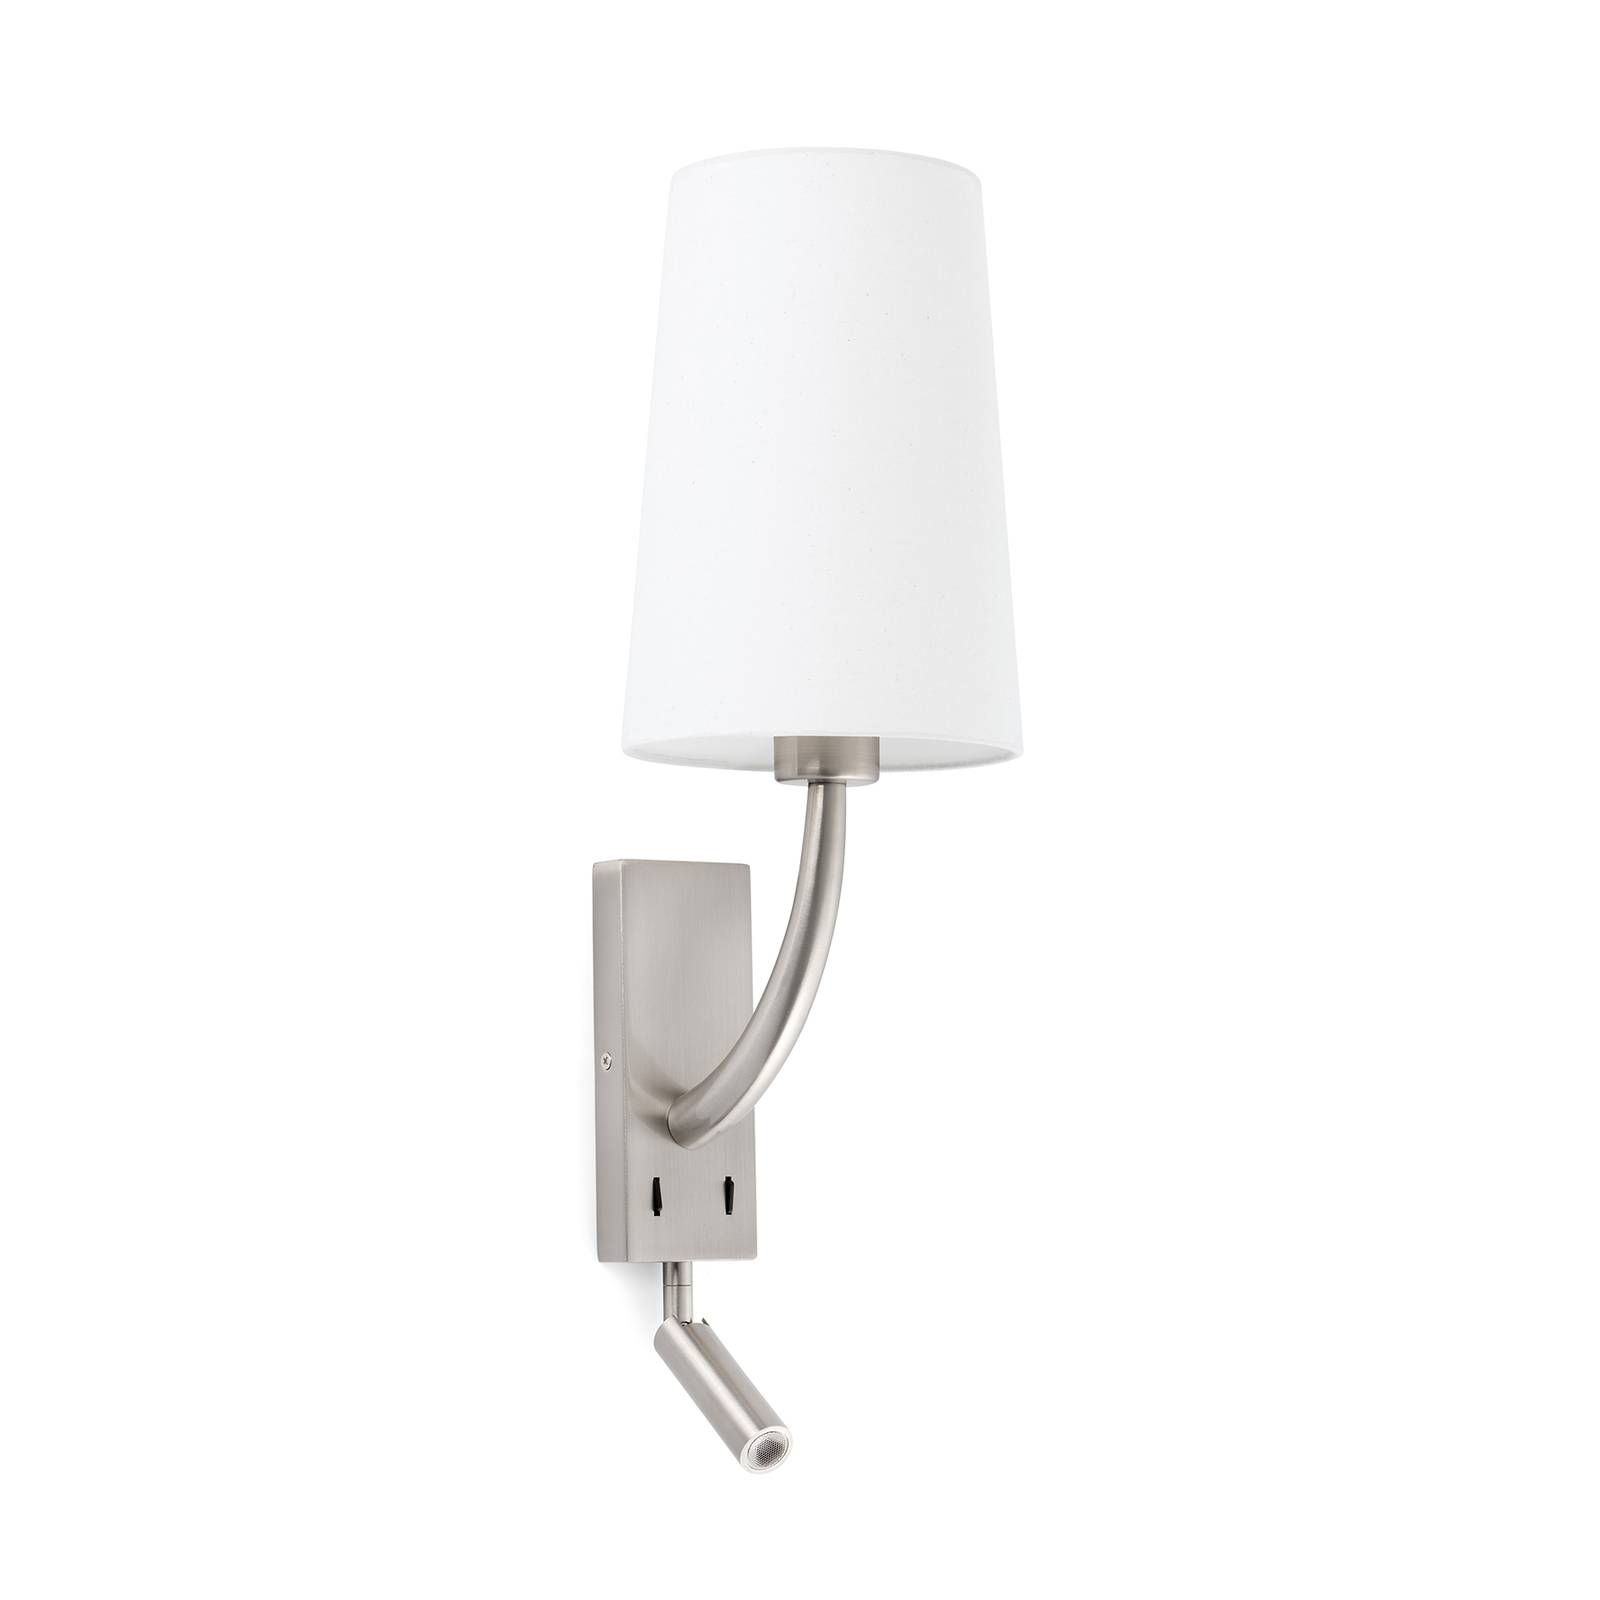 Wandlamp Rem met LED leeslampje, wit/nikkel